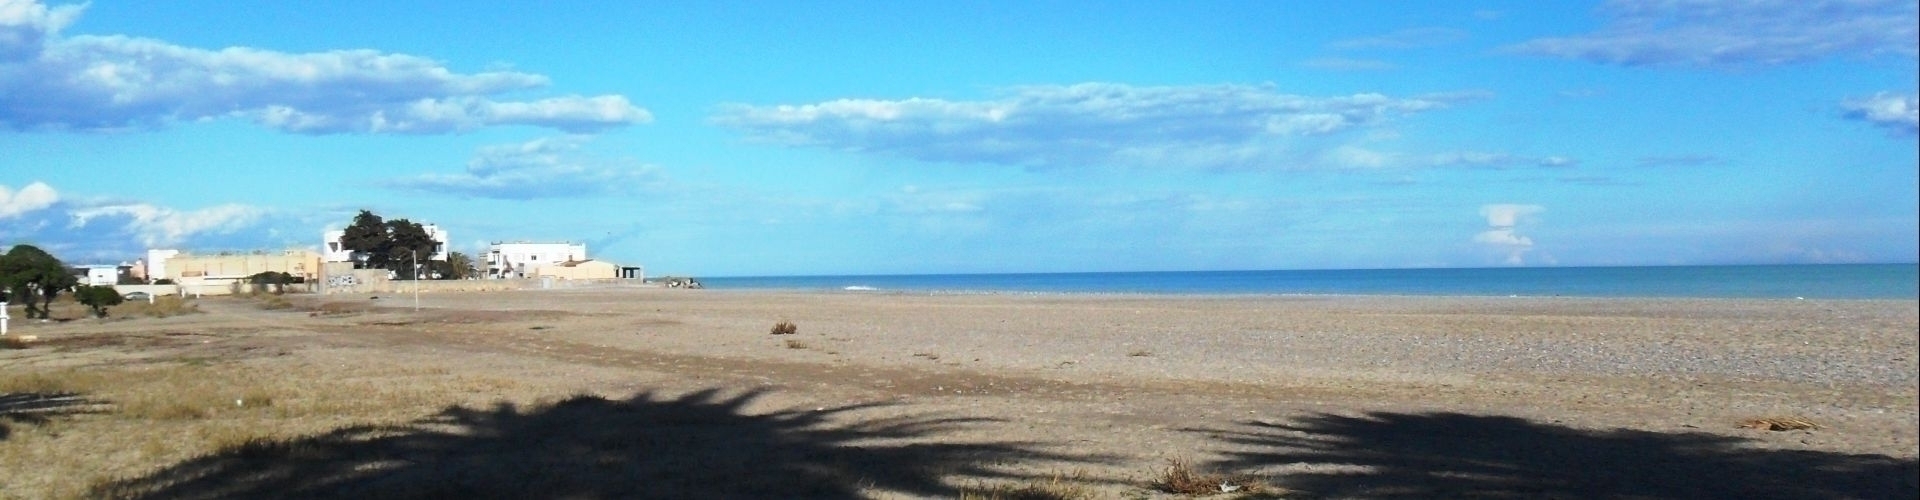 Playa Malvarrosa de Corinto